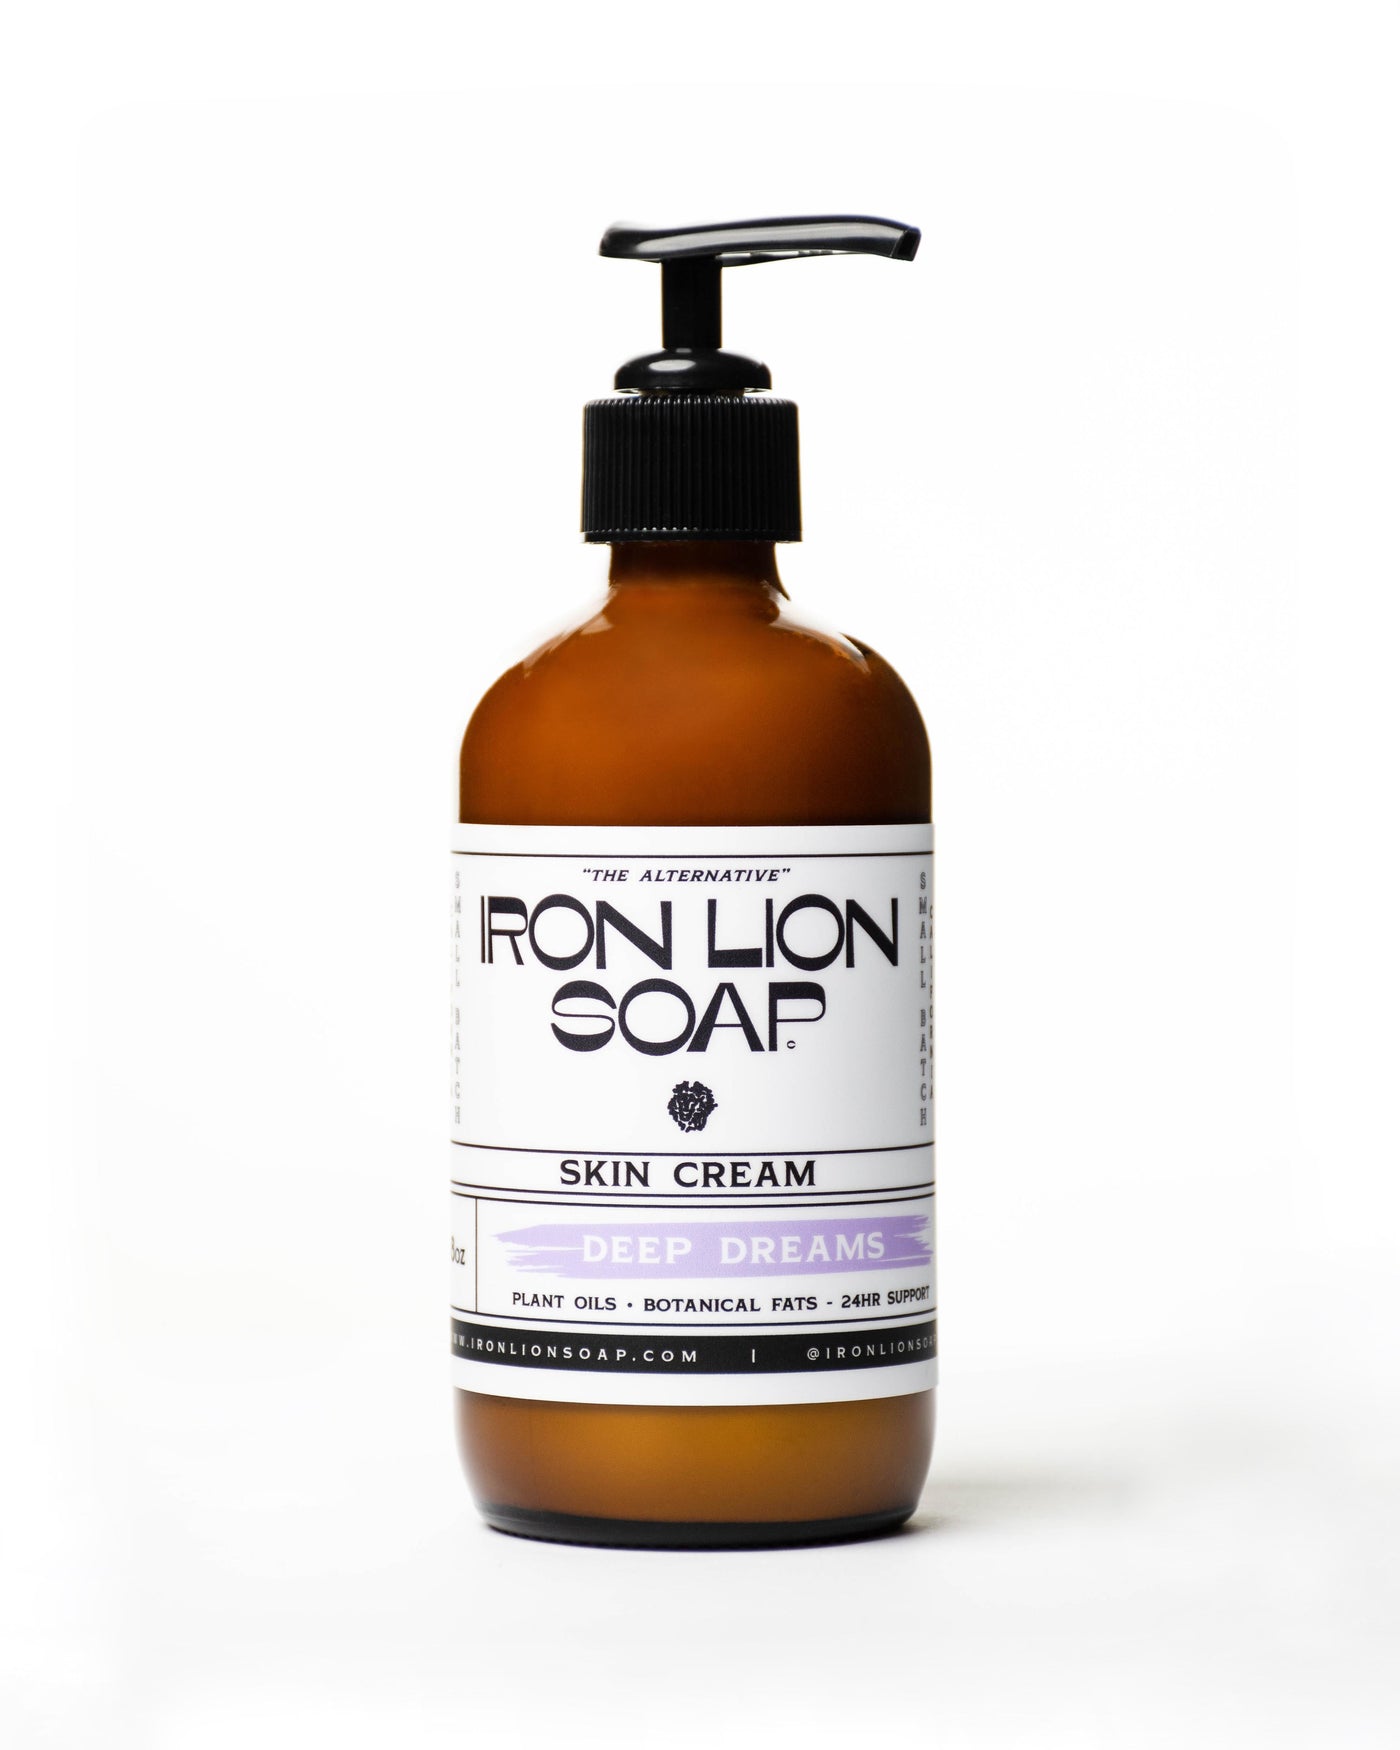 8oz Daily Skin Cream Iron Lion Soap Deep Dreams 